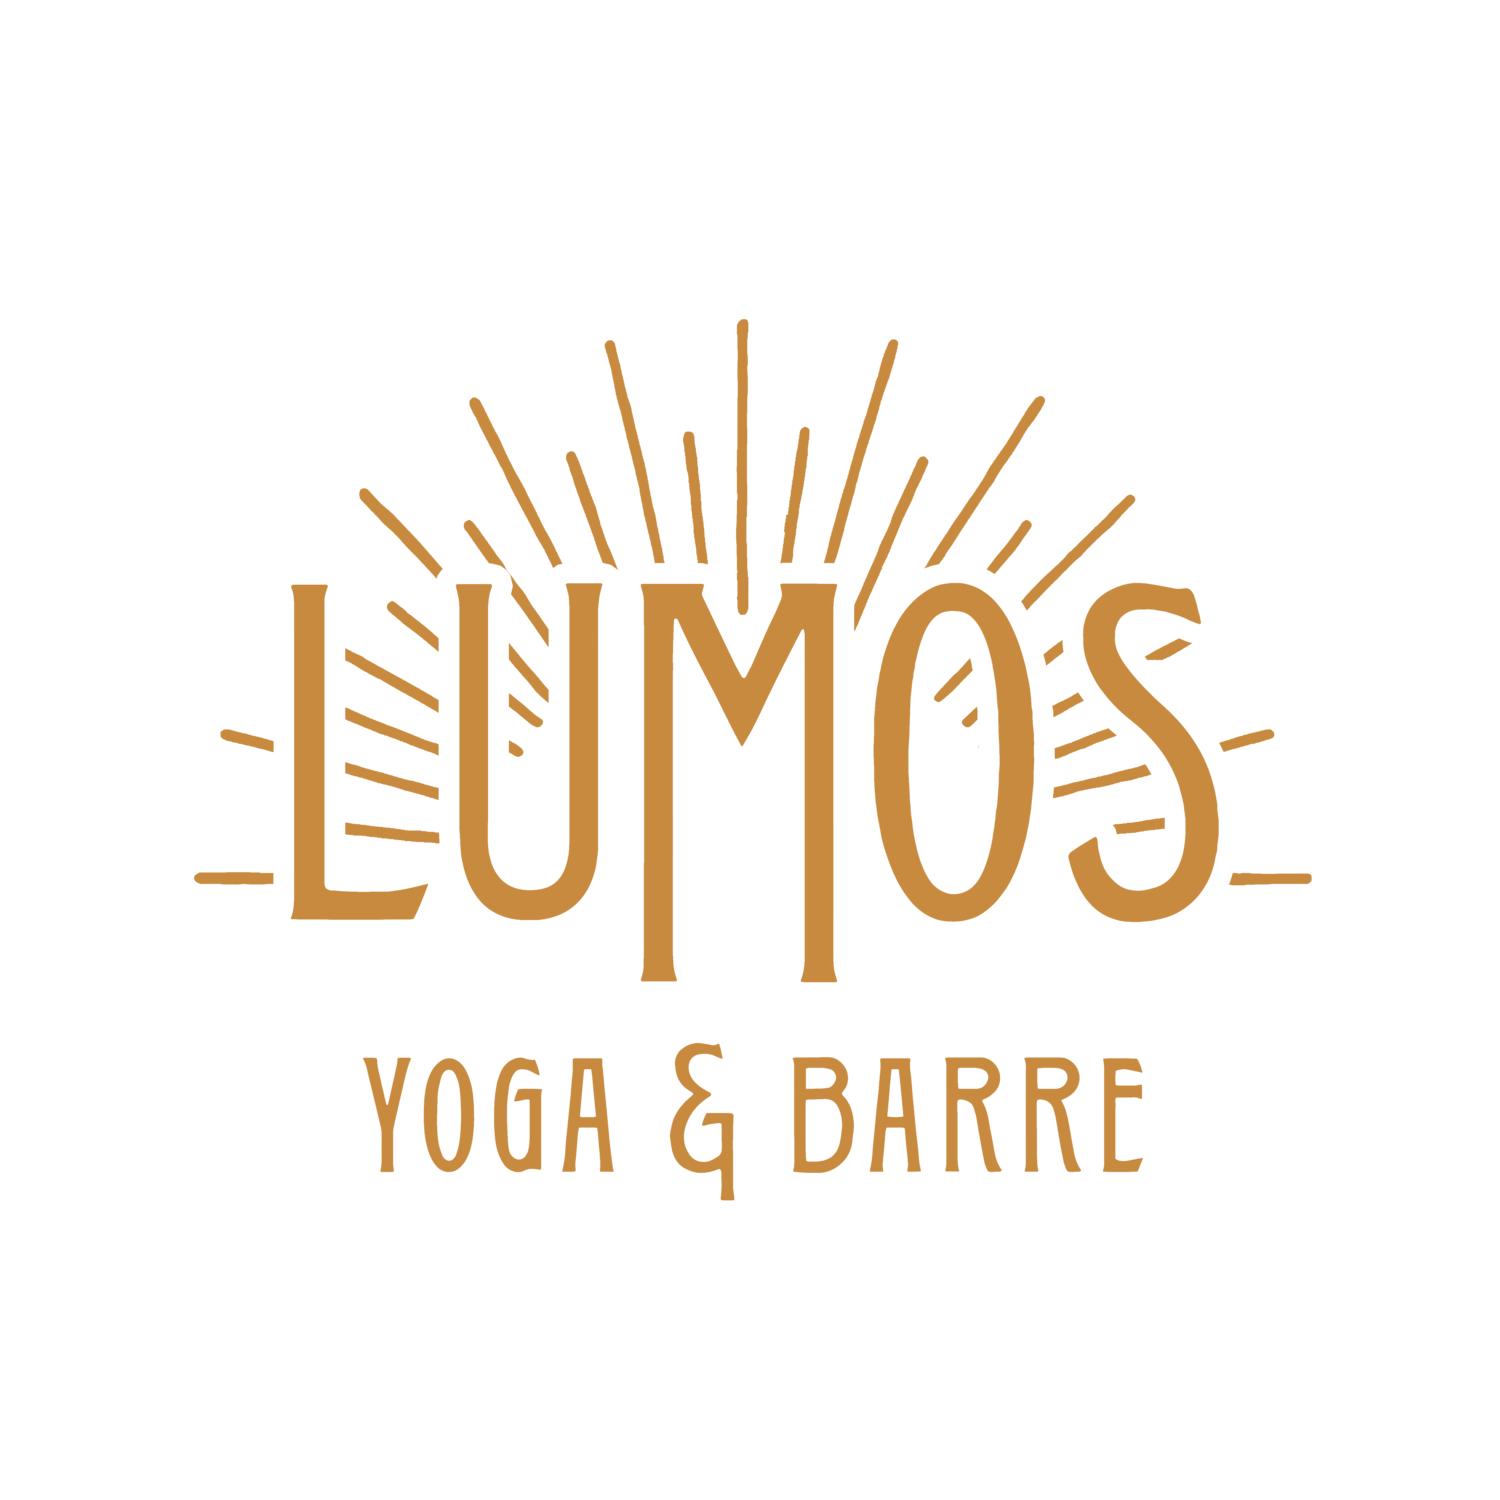 Lumos Yoga & Barre offers Inclusive and Welcoming Neighborhood Yoga Classes in Philadelphia, PA